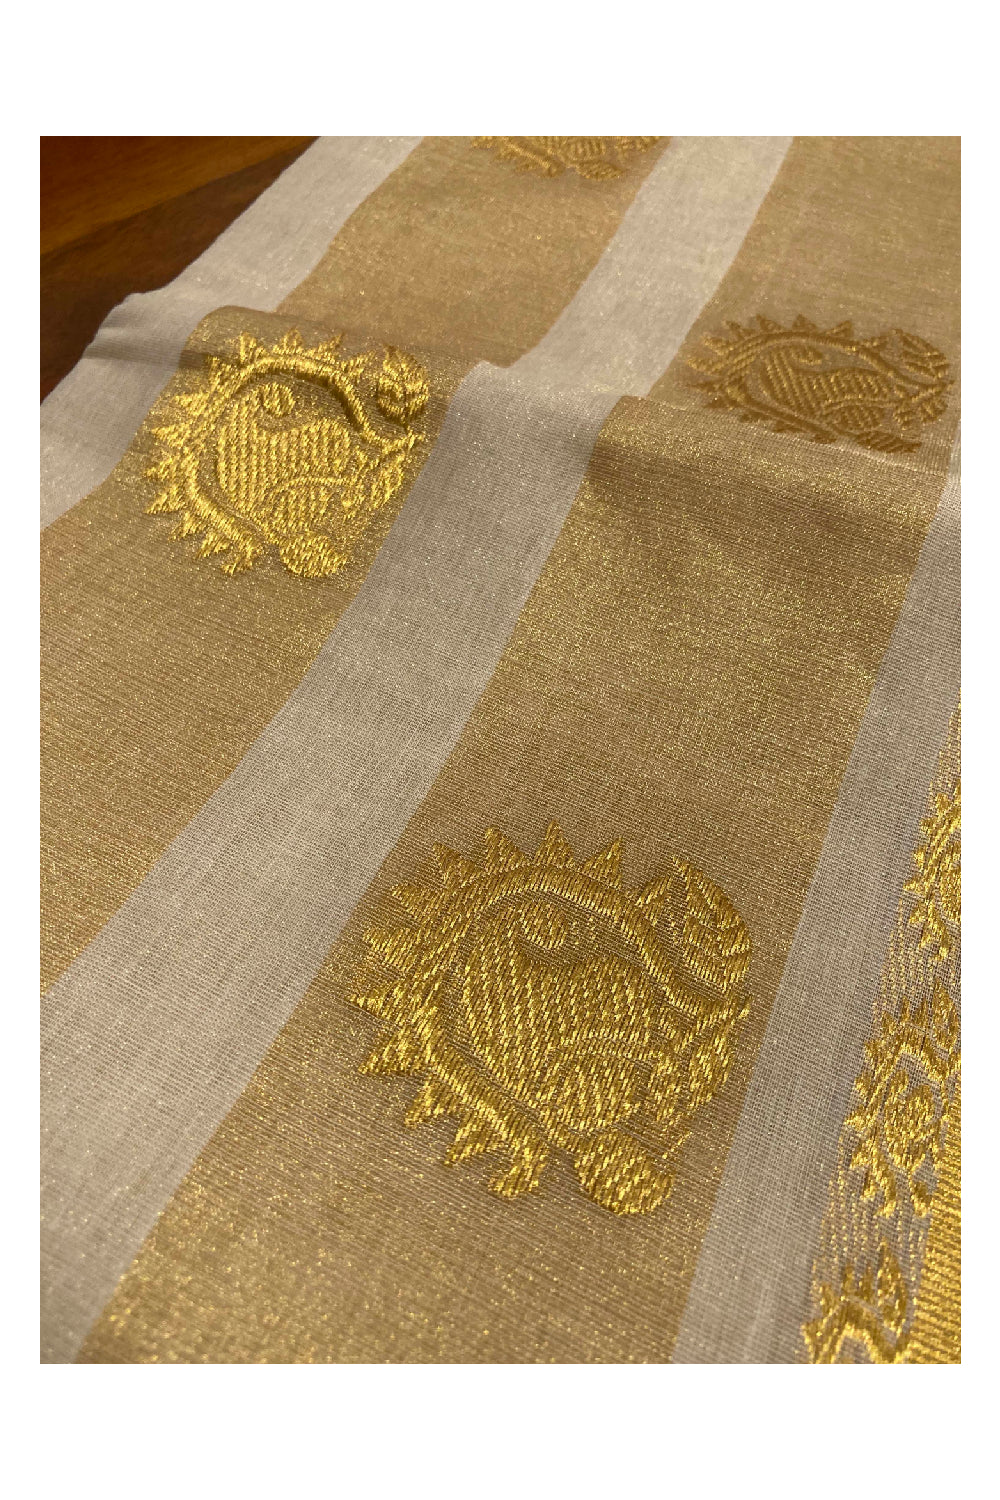 Southloom Kuthampully Premium Handloom Tissue Heavy Work Saree with Paisley Motifs